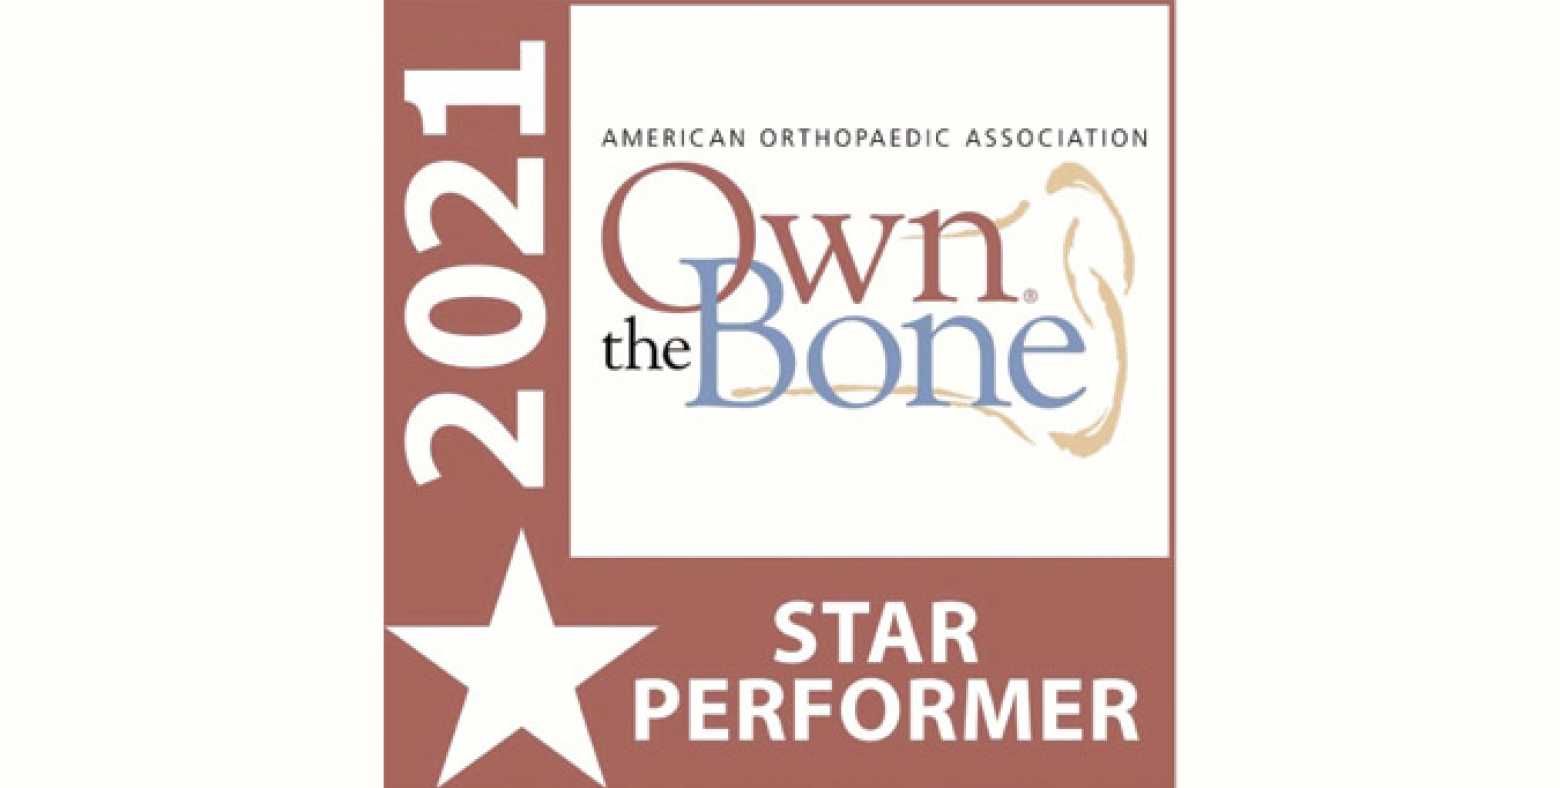 Own the Bone star performer logo